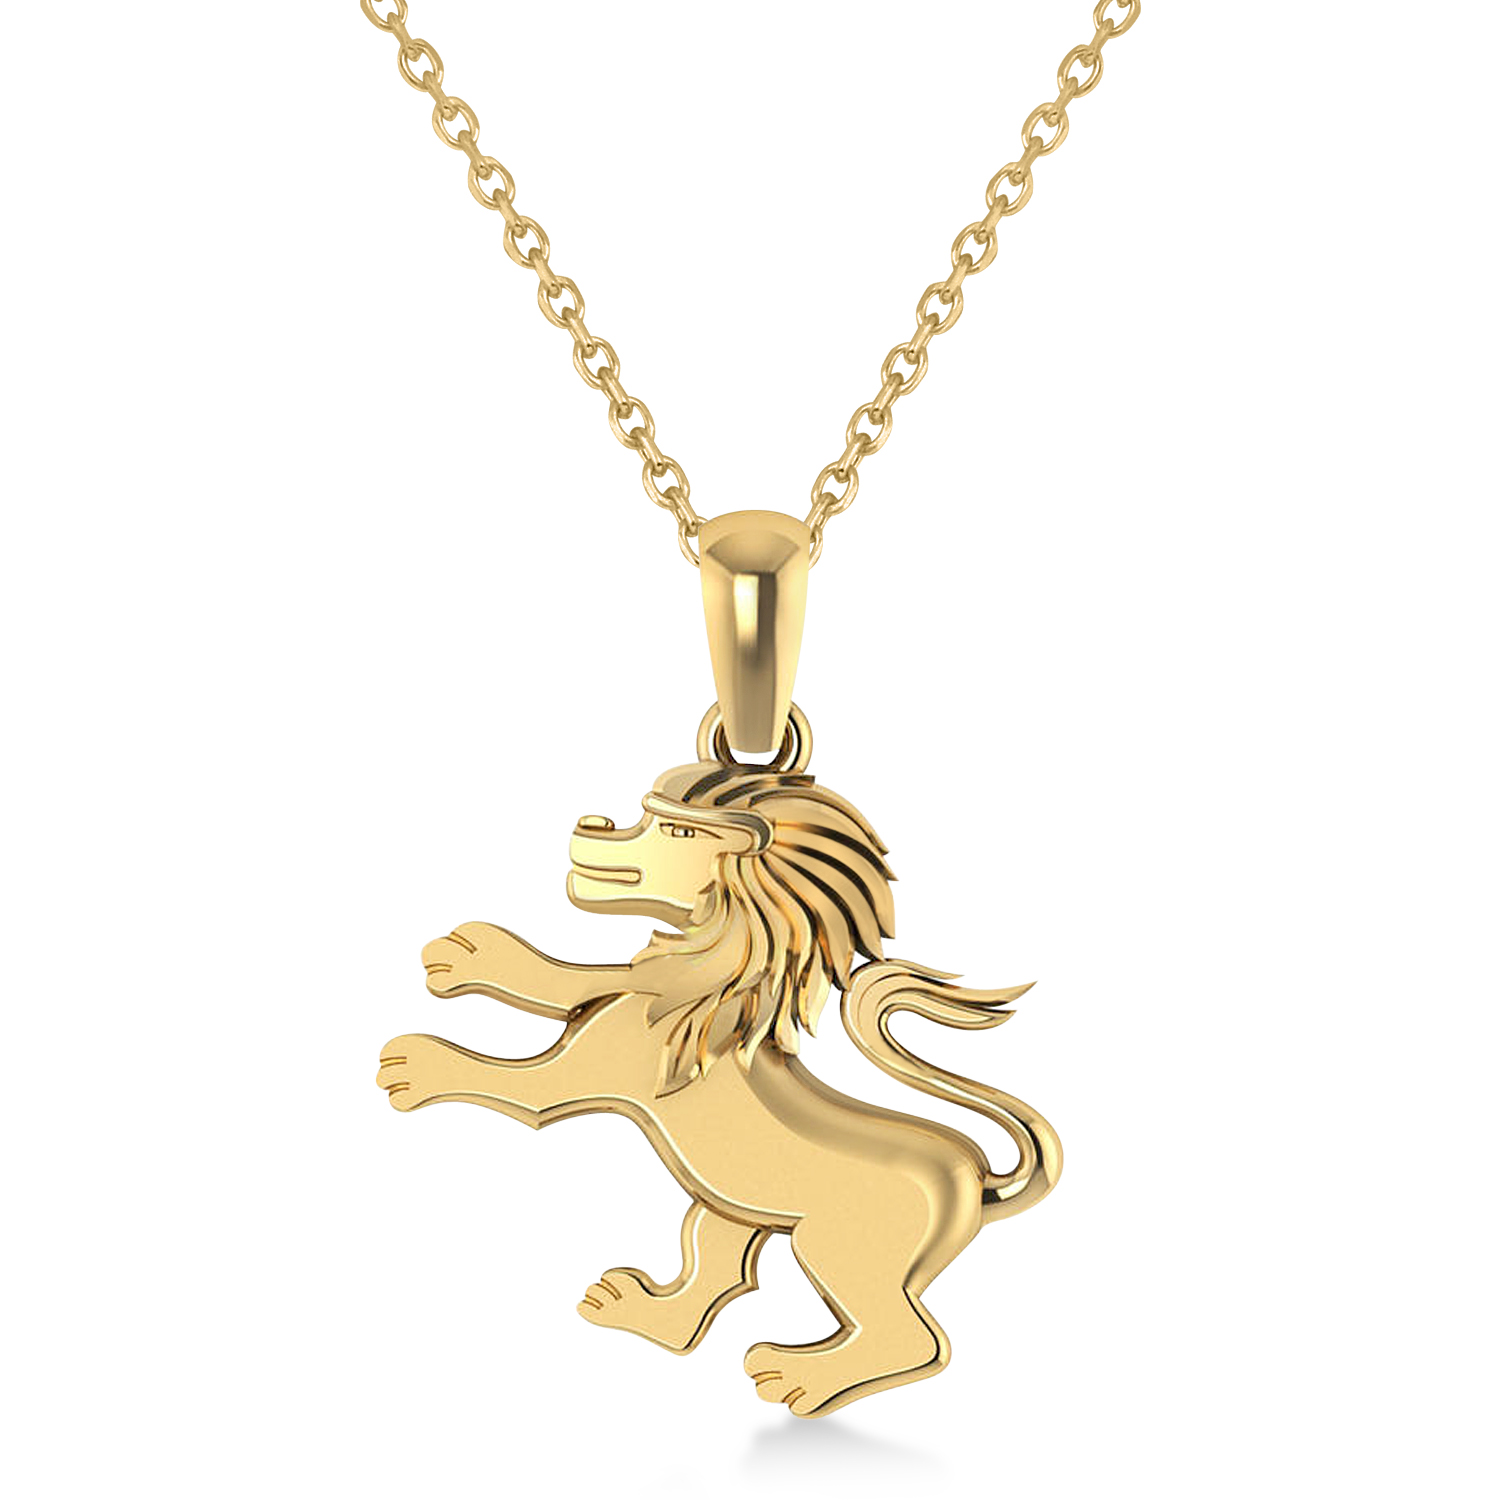 Roaring Lion Charm Pendant Necklace 14k Yellow Gold by Allurez.